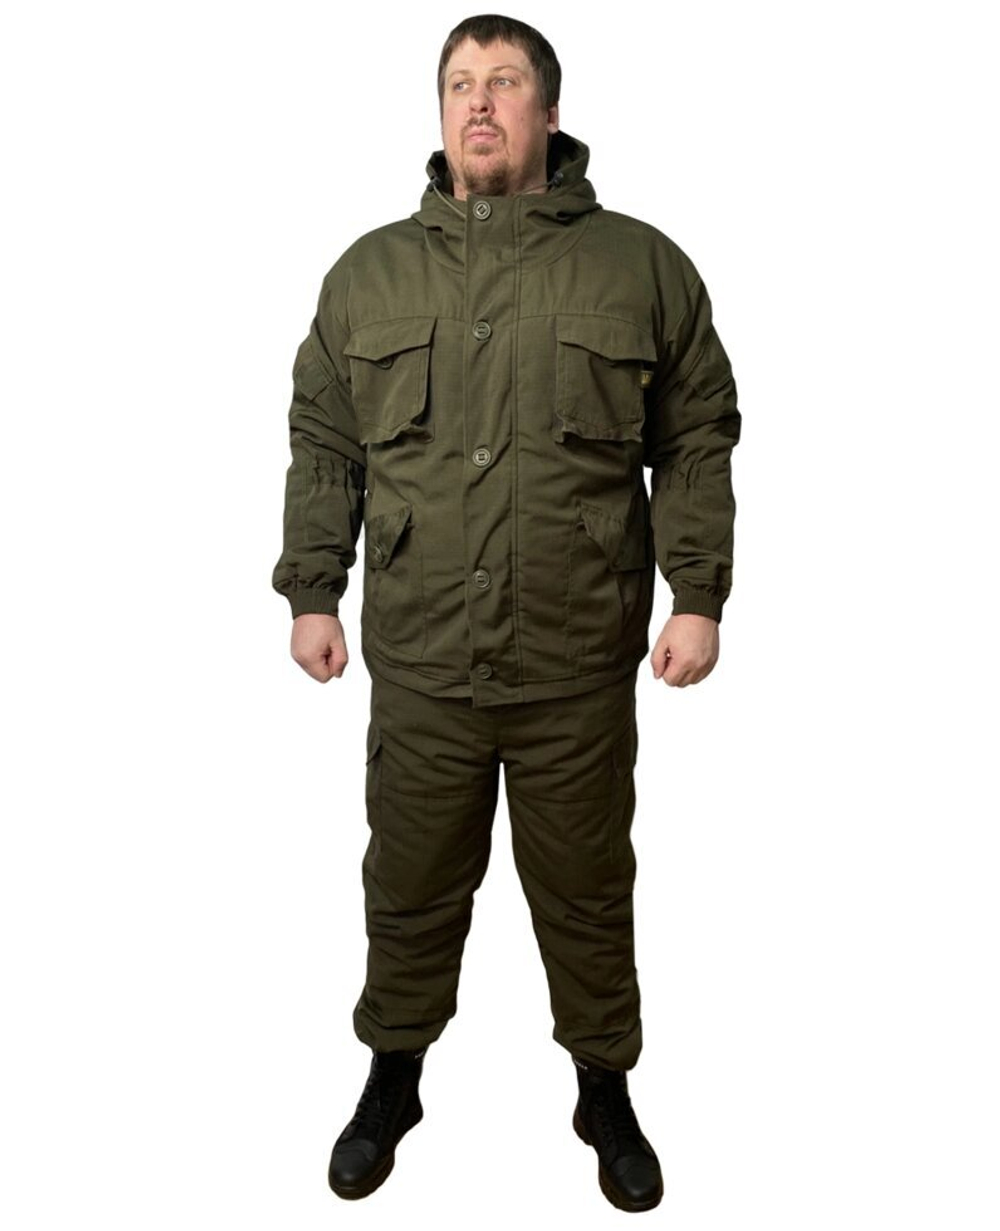 Демисезонный костюм Горка-8 премиум рип-стоп (олива)